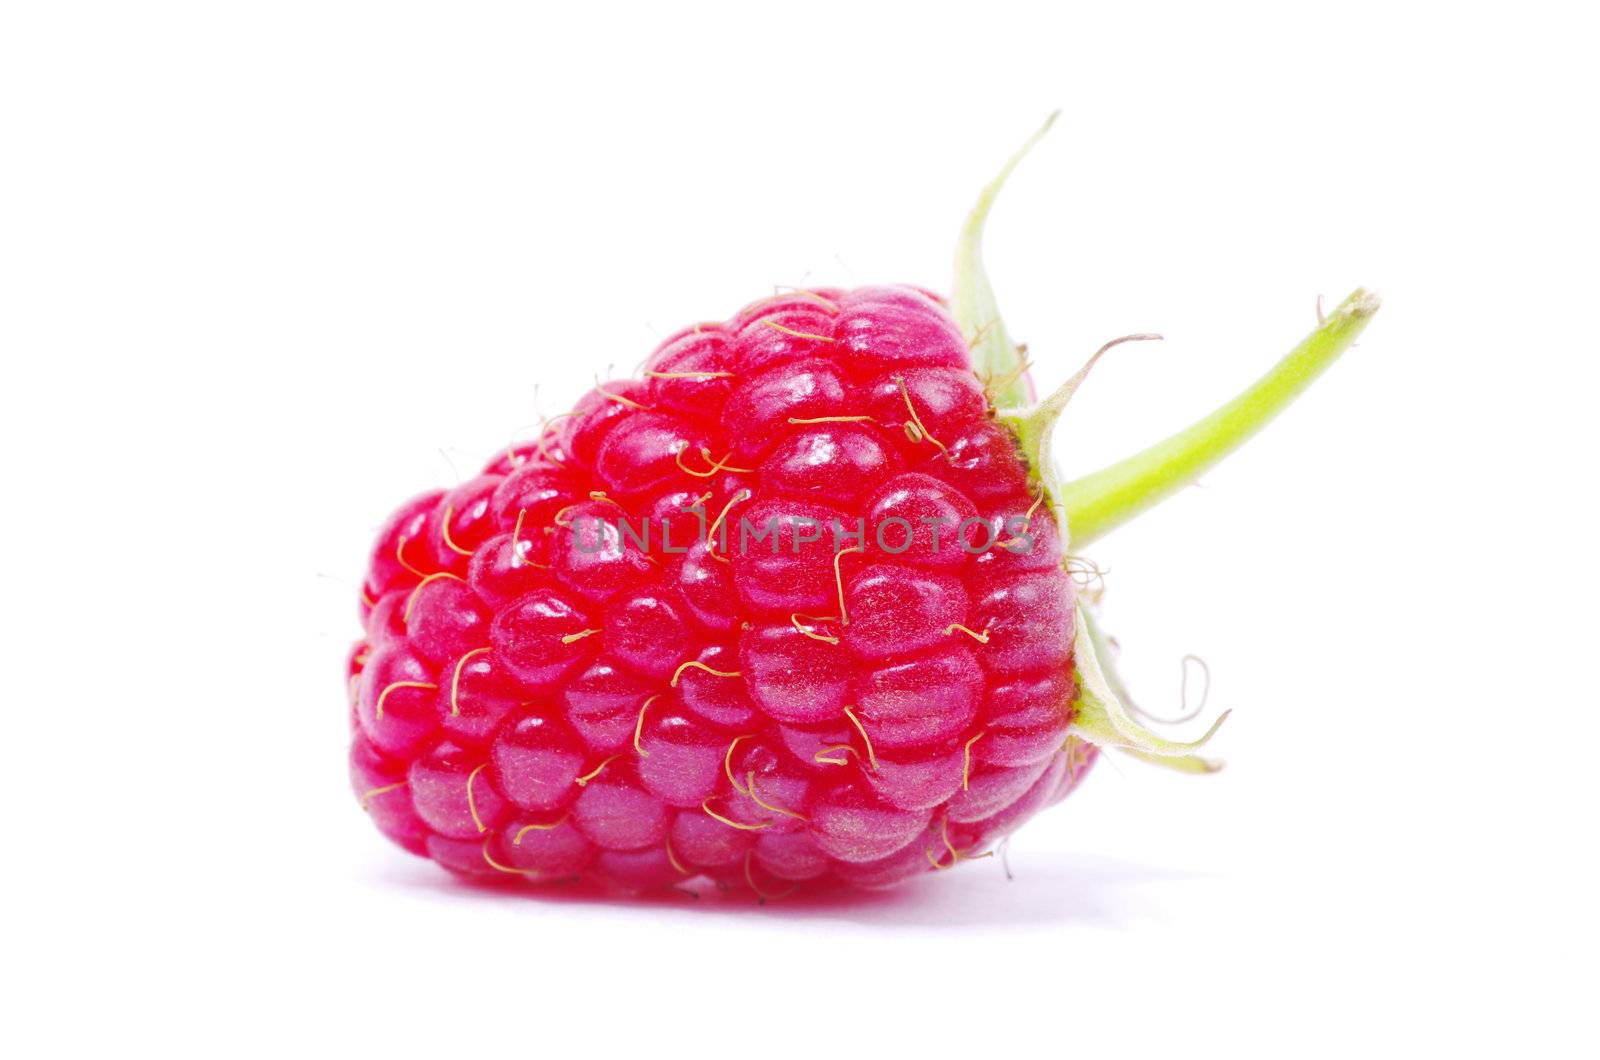 fresh raspberry closeup isolated on white background